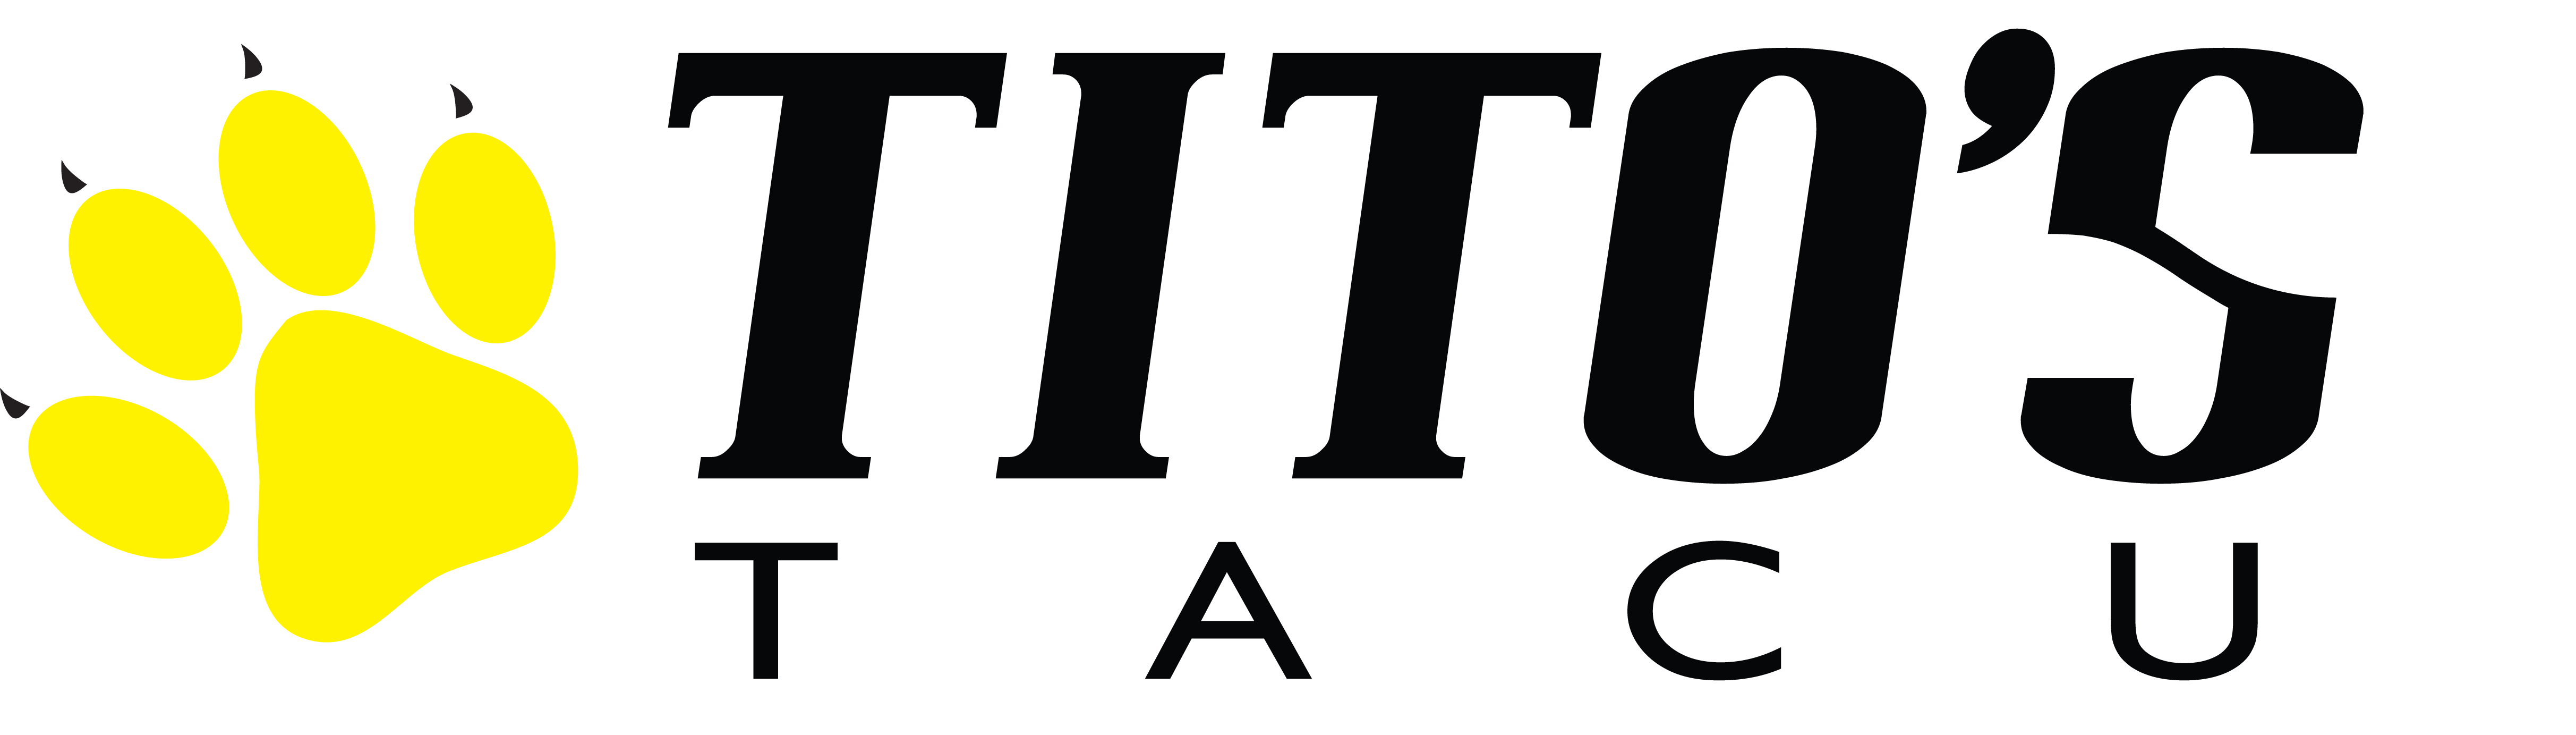 Tito's Logo - Titos Tacu Logo Area Credit Union